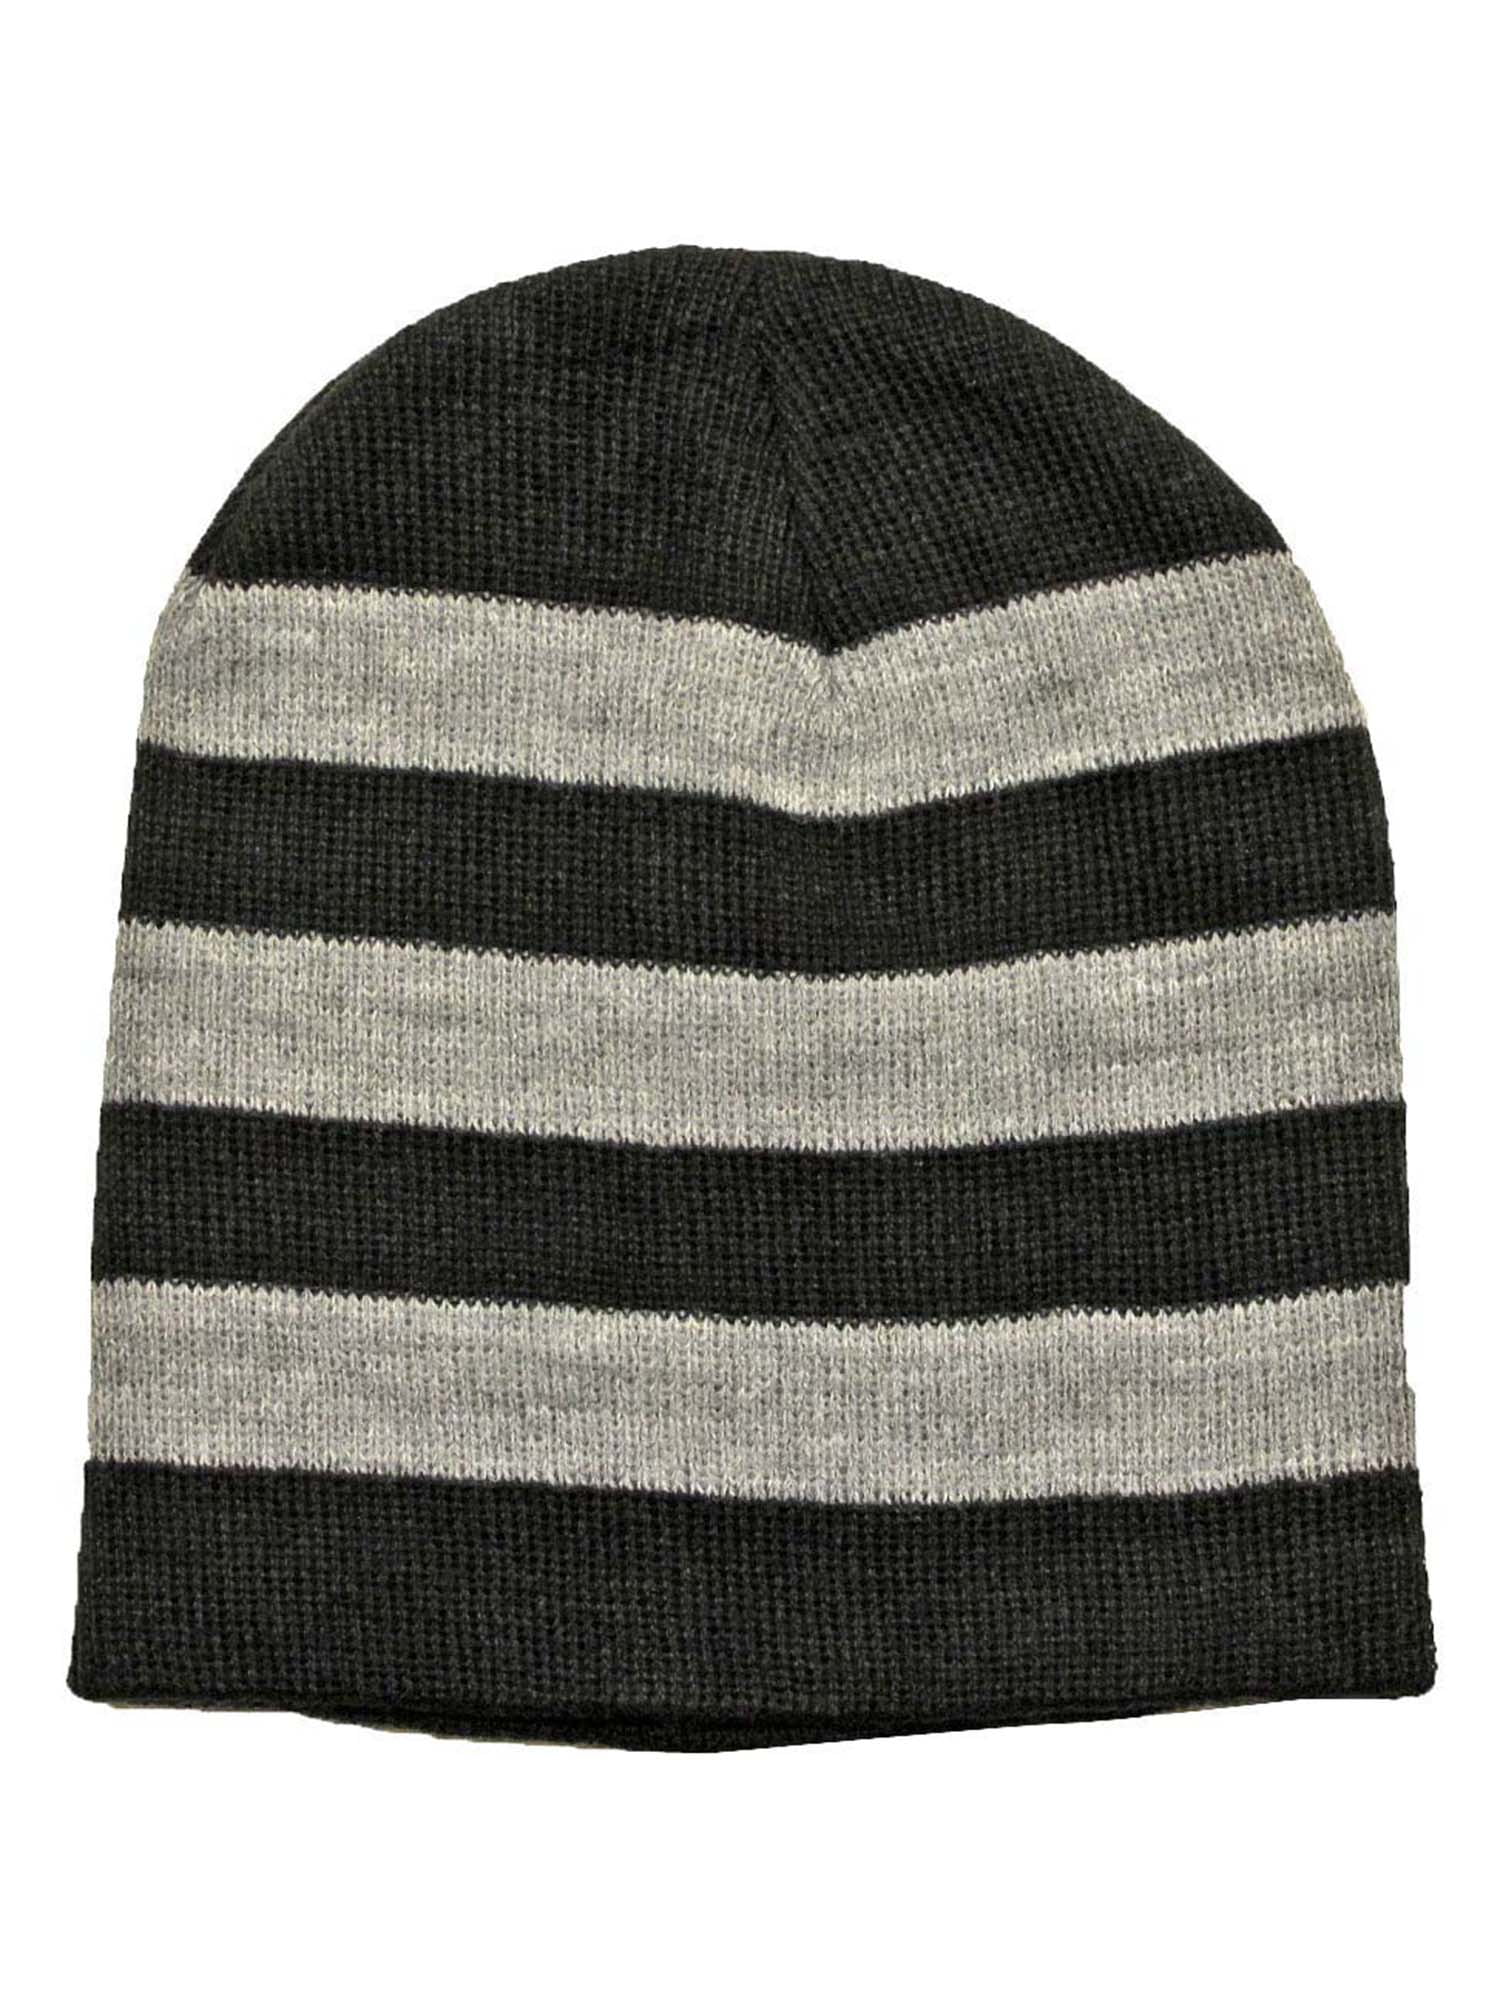 Black & Gray Tight Fitting Striped Knit Beanie Cap - Walmart.com